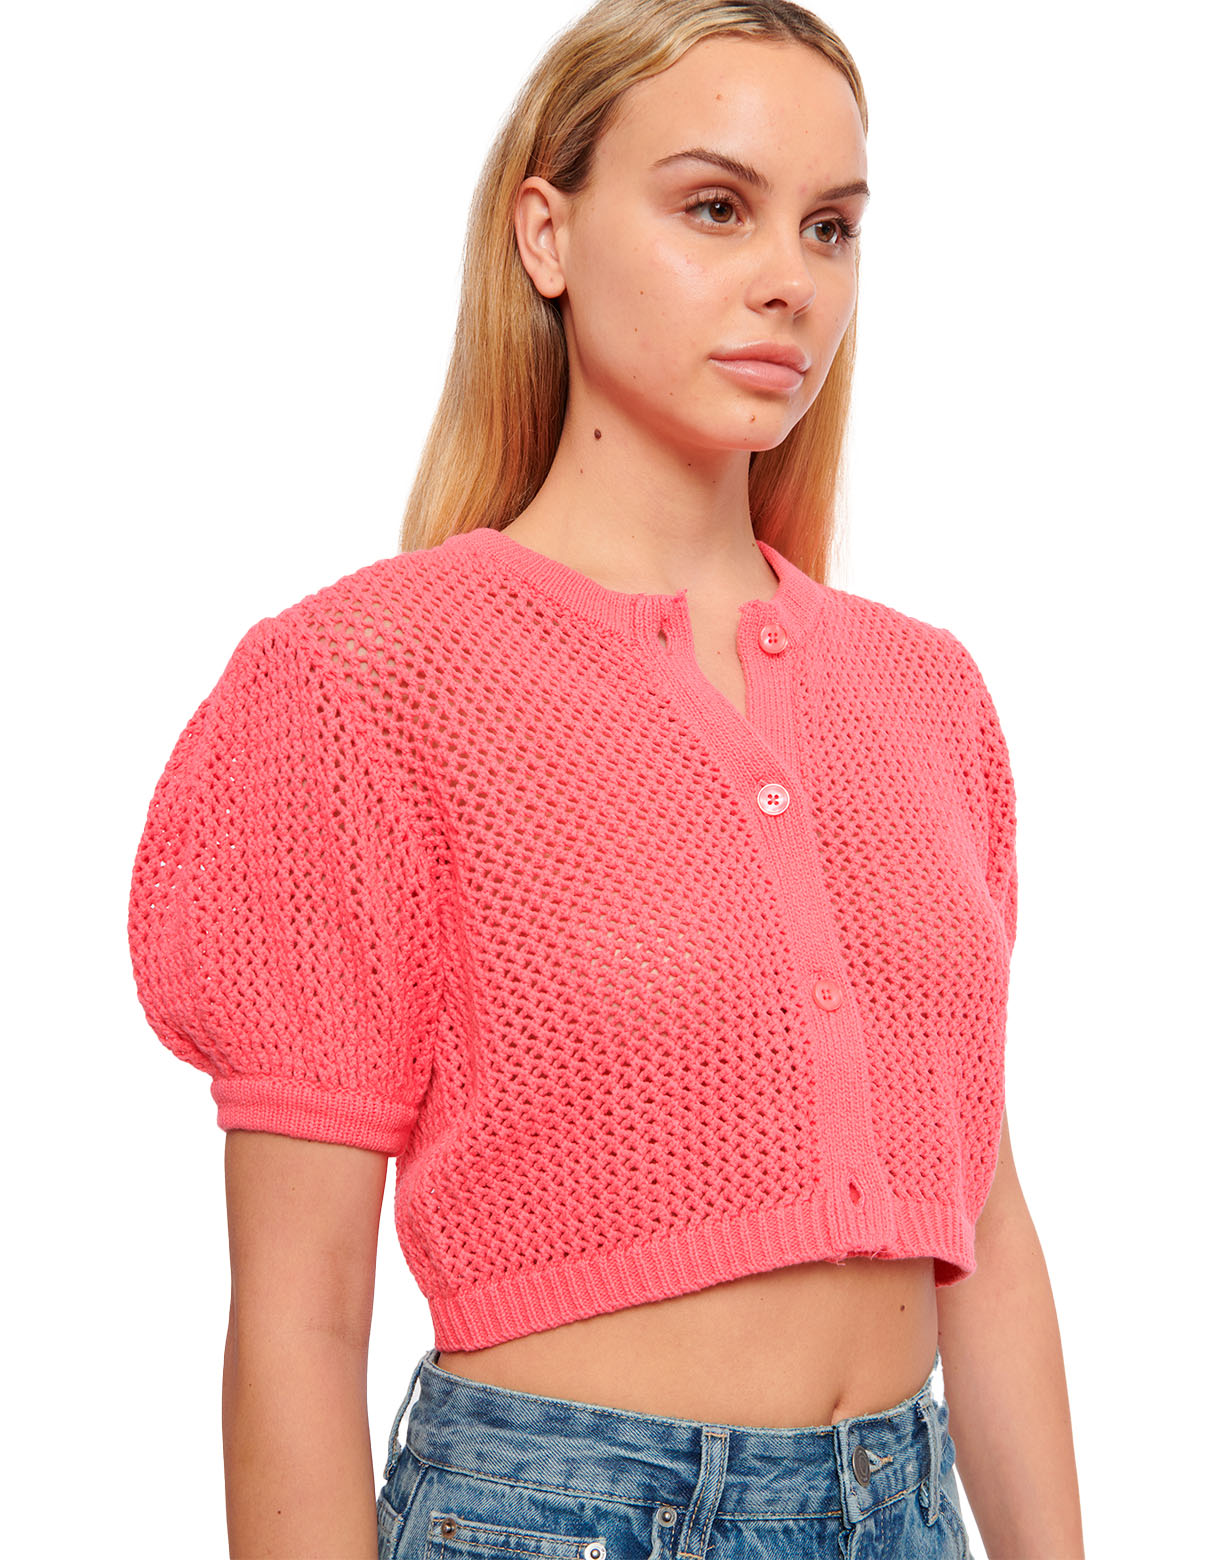 samantha crochet cropped cardi sweater hot pink - women's figure flattering designer fashion summer cute cardigans 